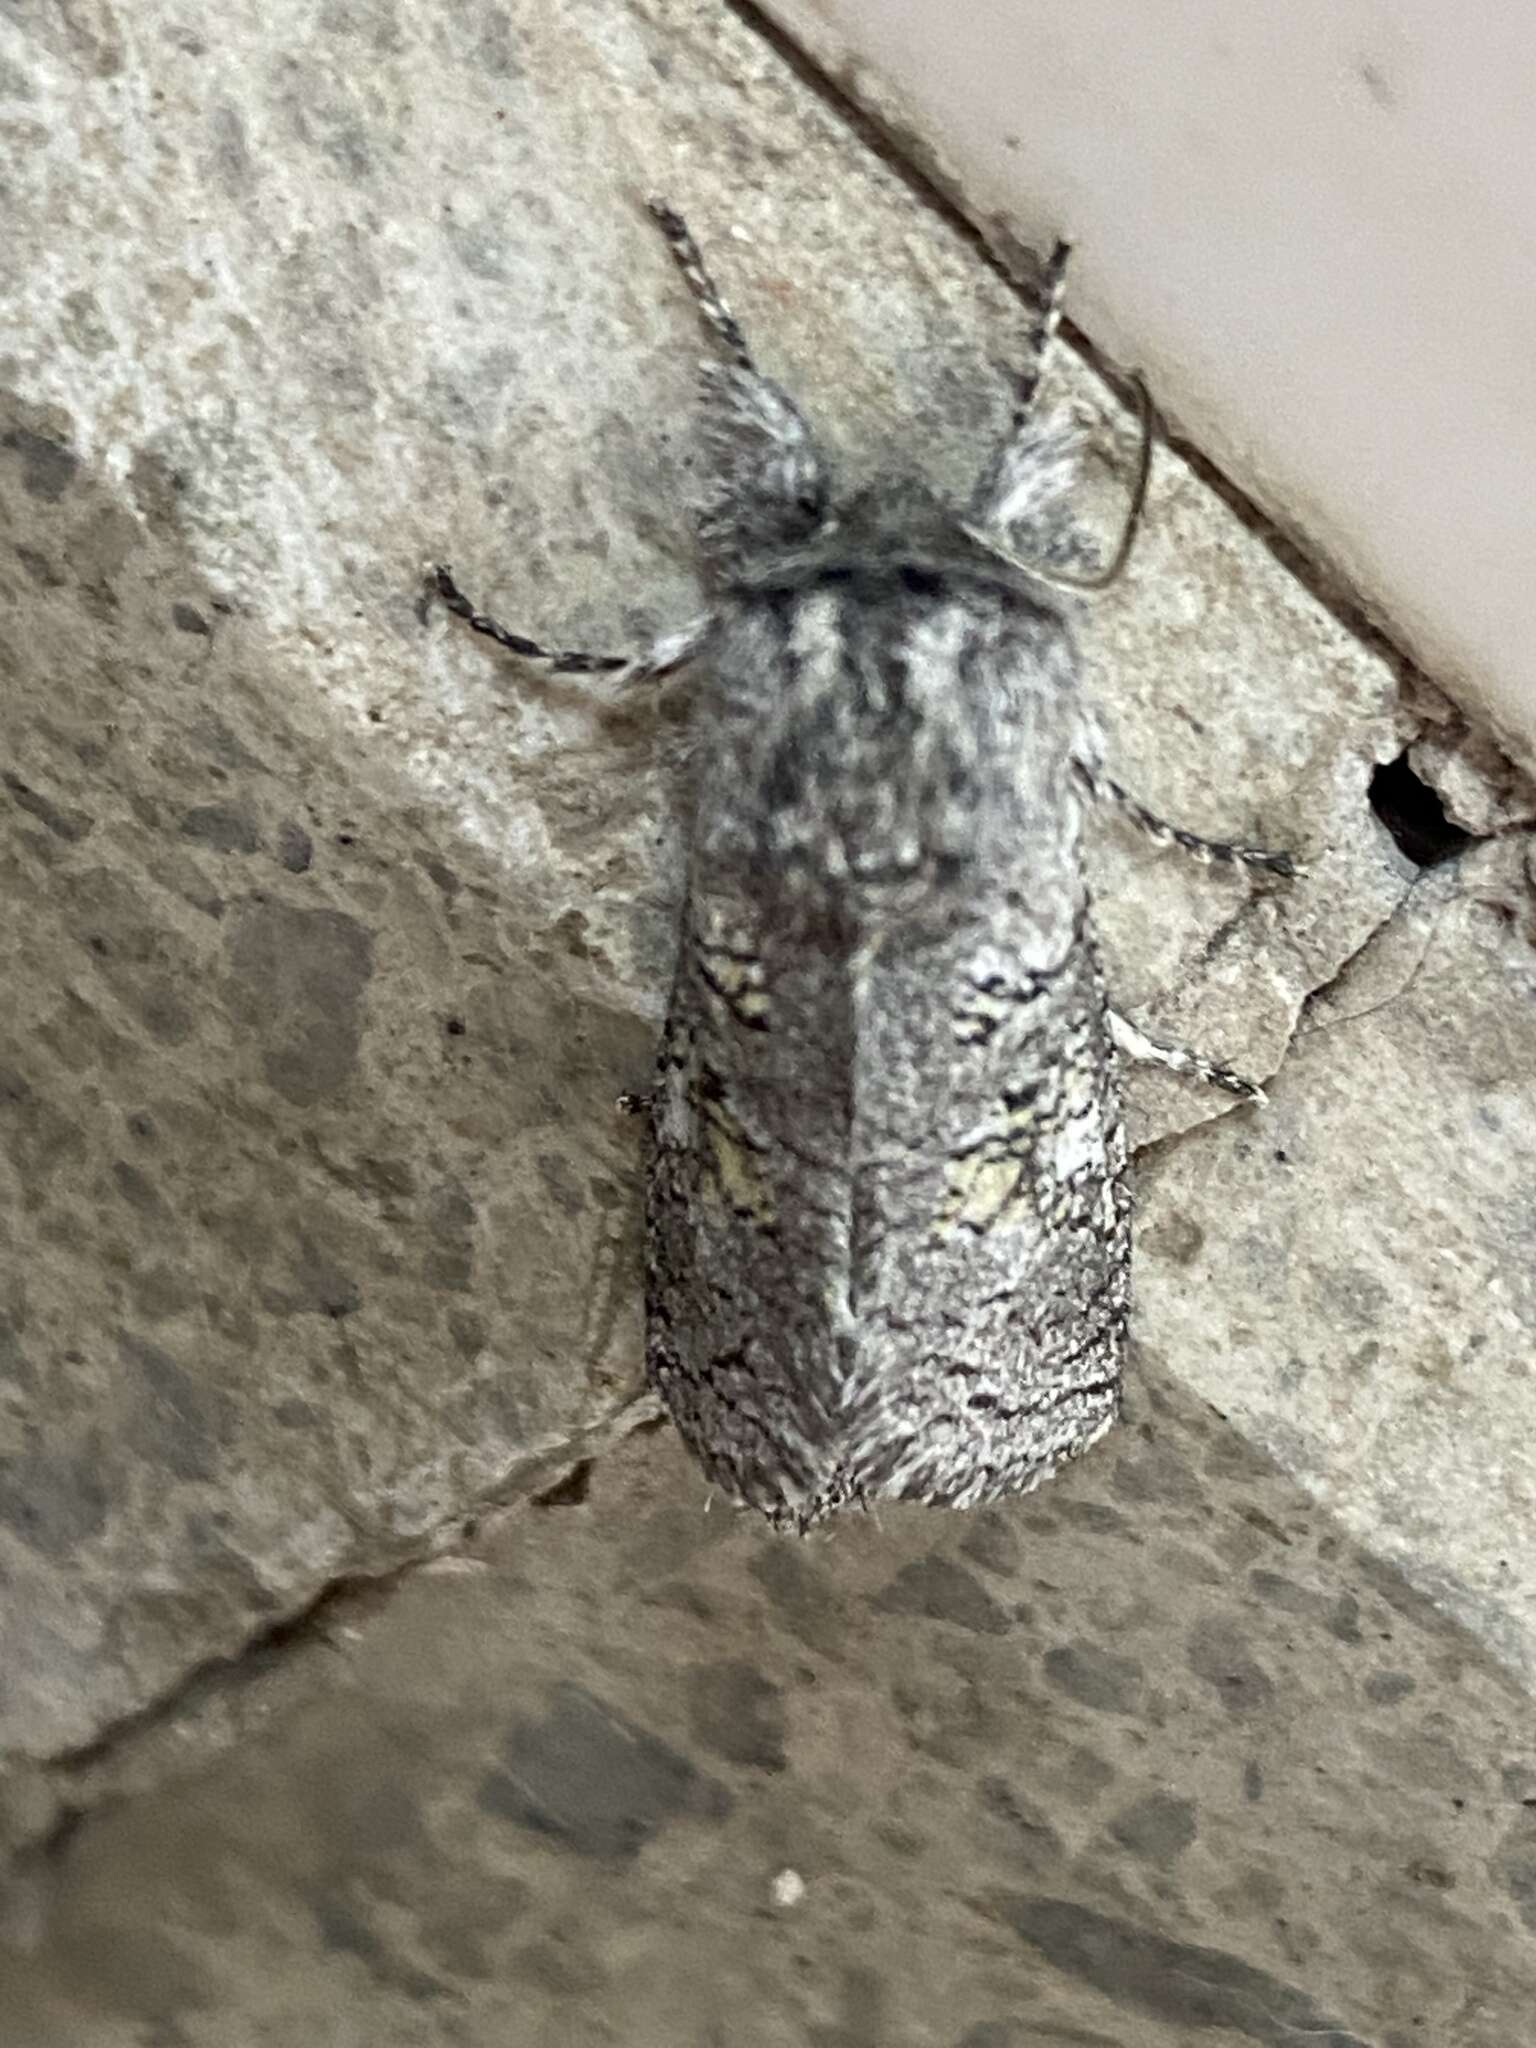 Image of Cossid moth